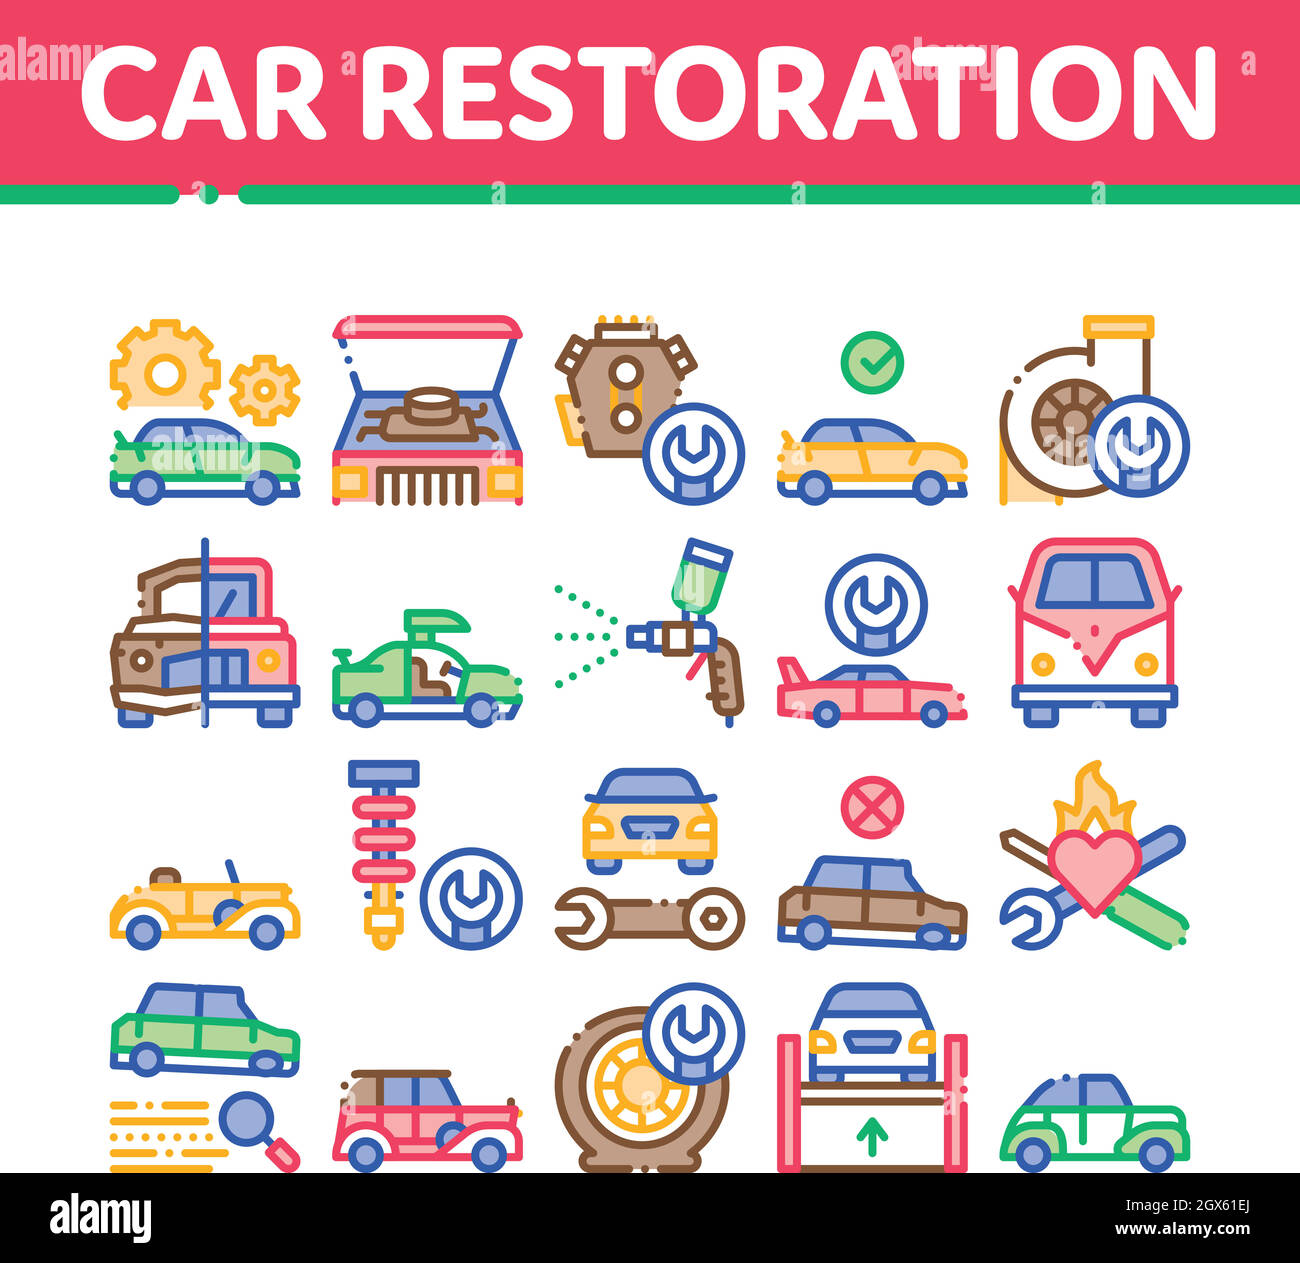 Car Restoration Repair Collection Icons Set Vector Illustrazione Vettoriale